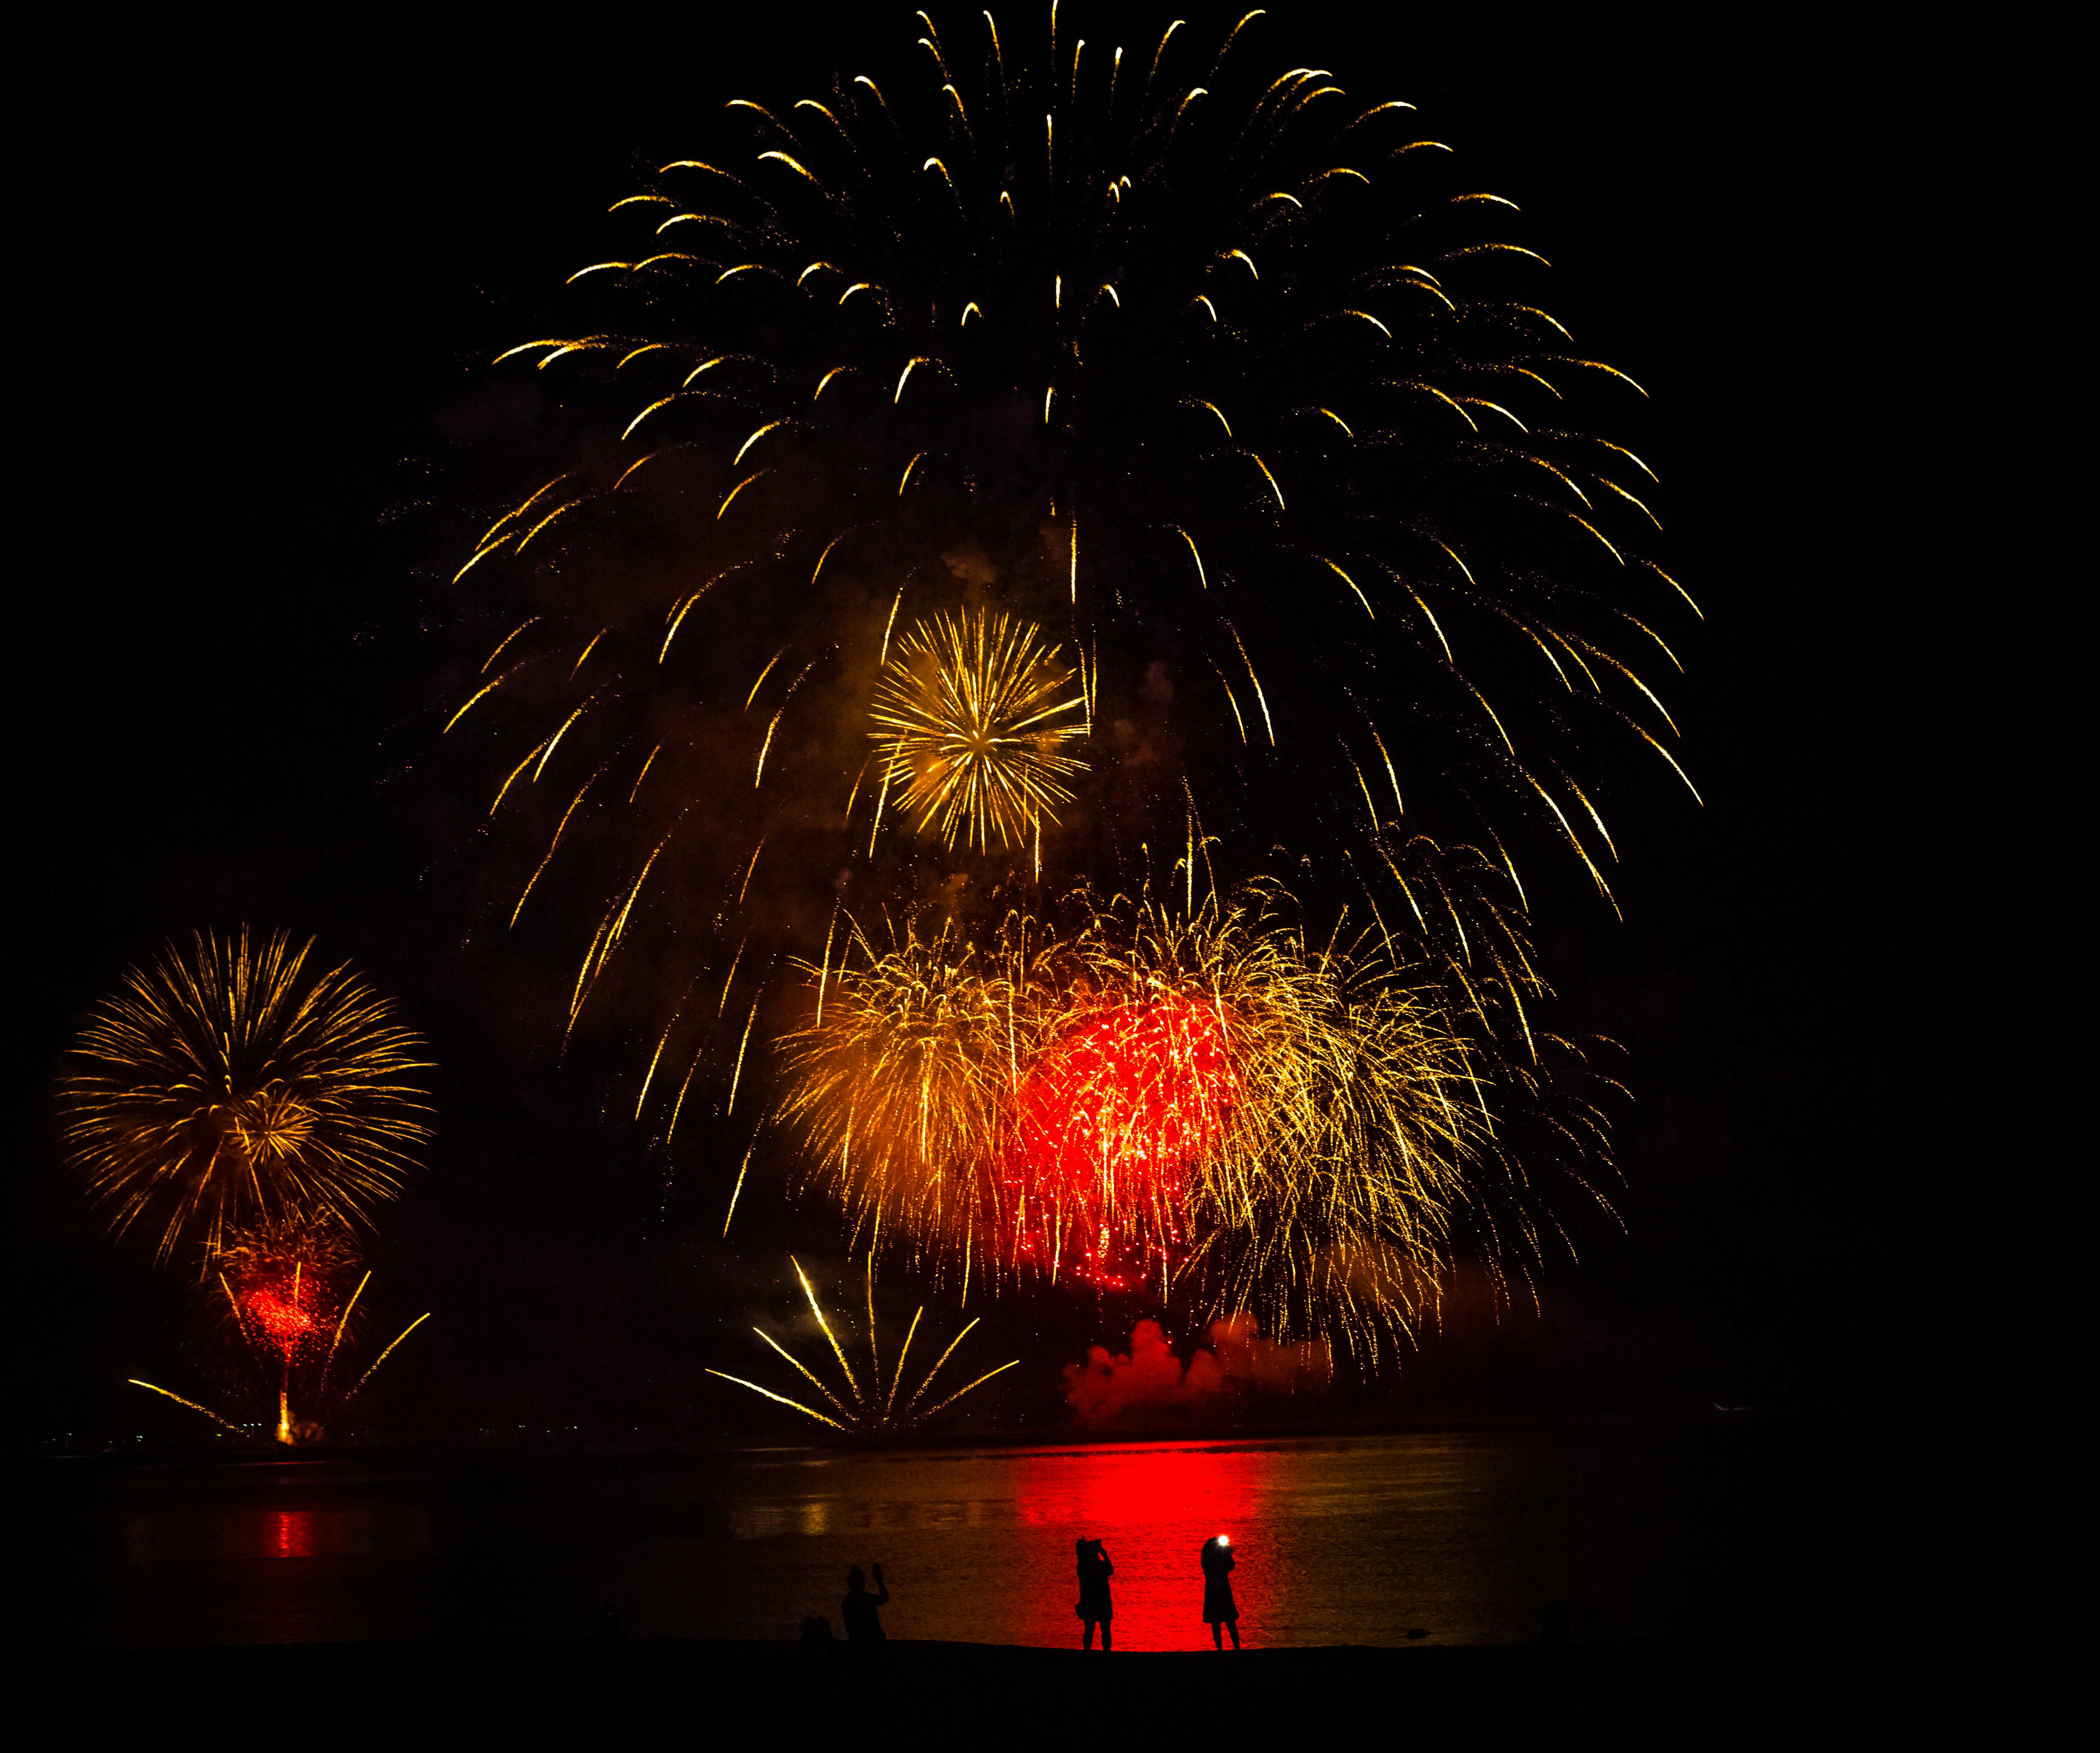 silhouette of people under fireworks display